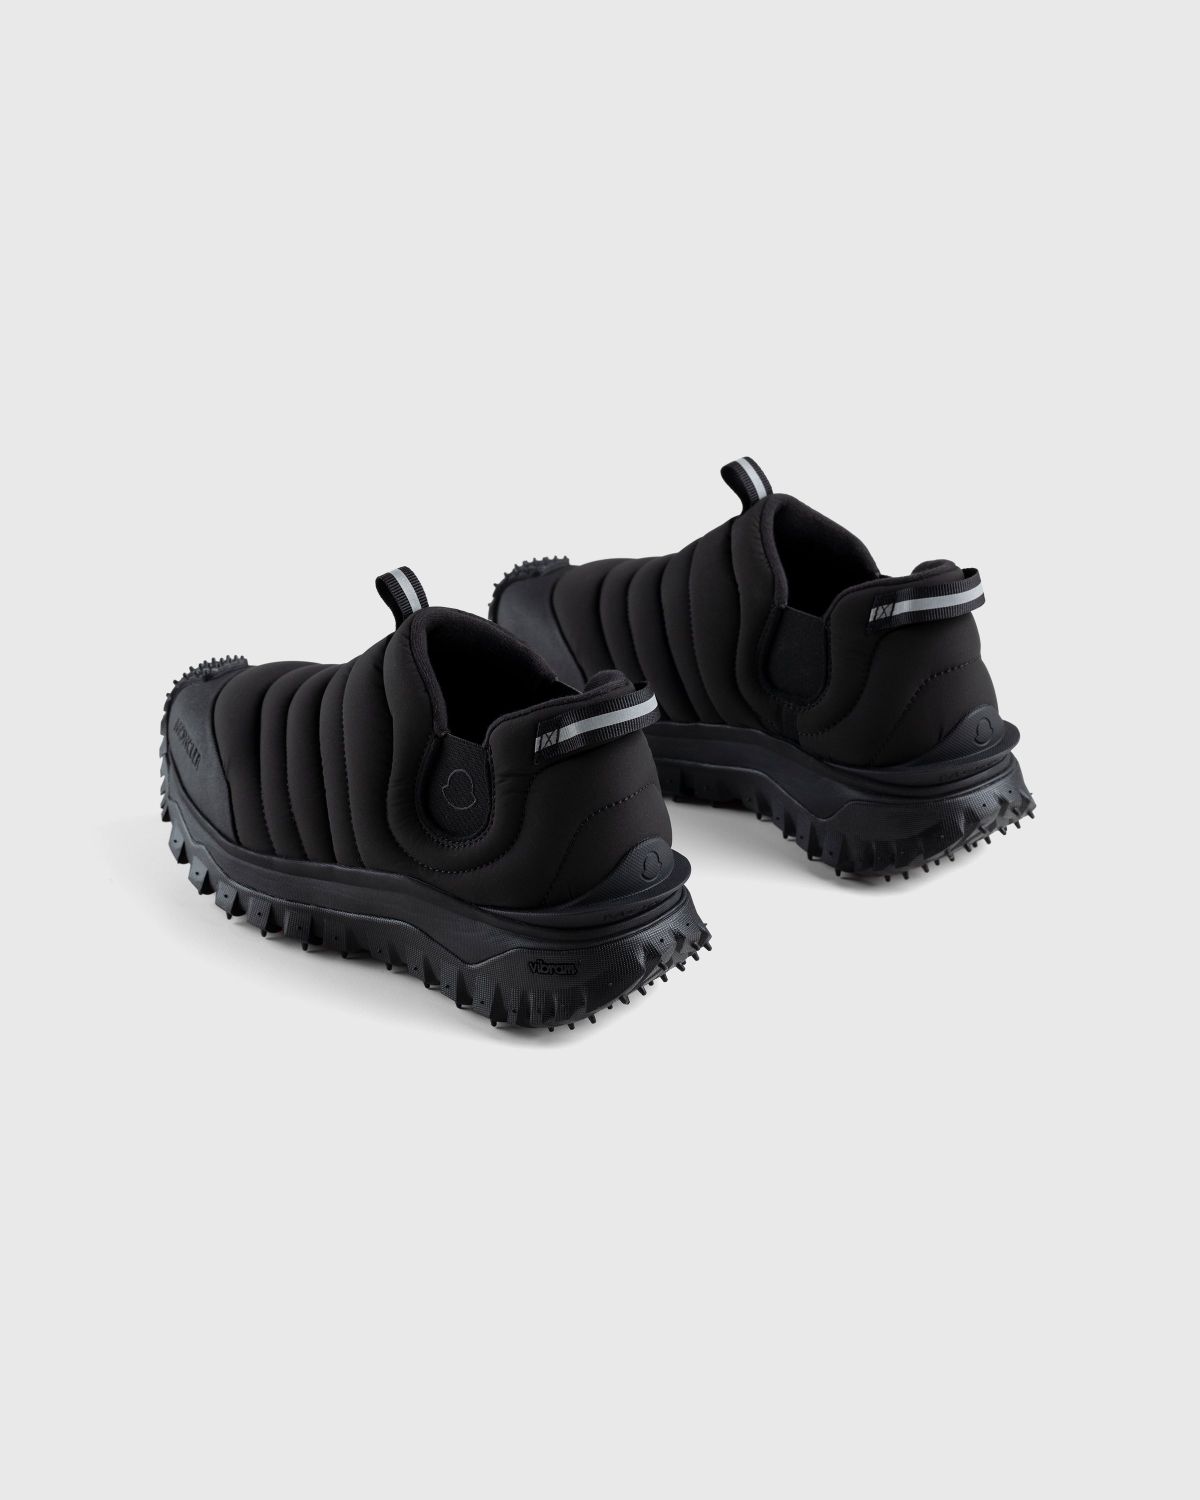 Moncler – Après Trail Sneakers Black - Low Top Sneakers - Black - Image 4